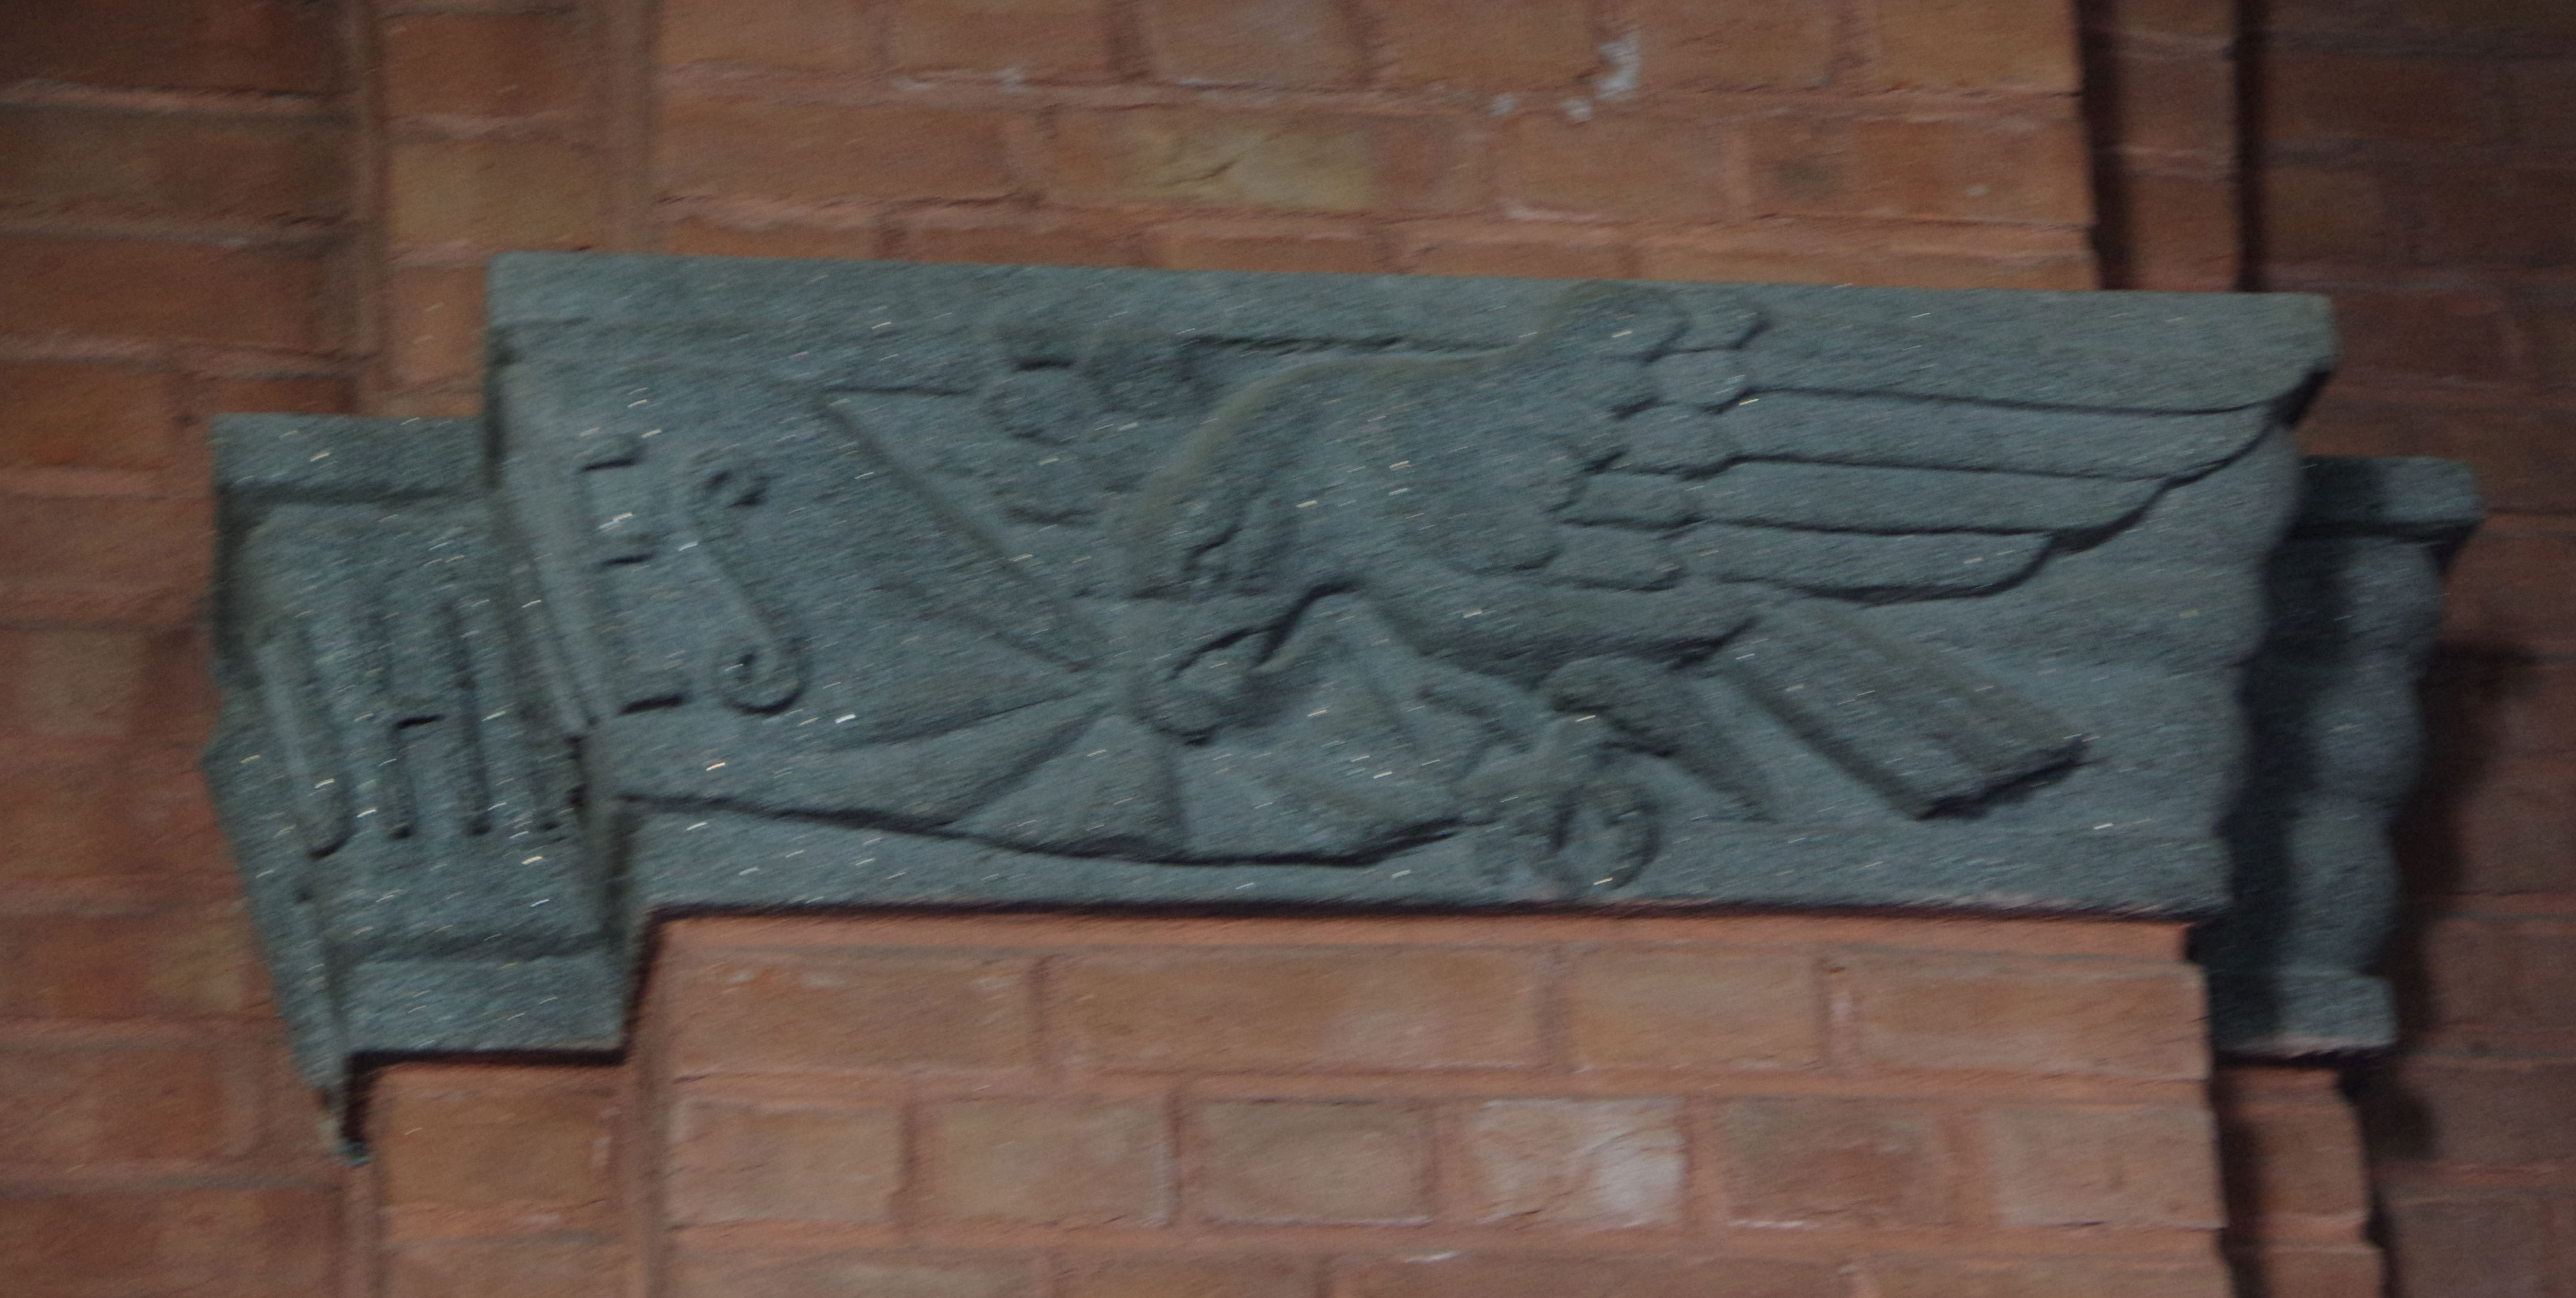 Ørnen - symbol for evangelisten Johannes